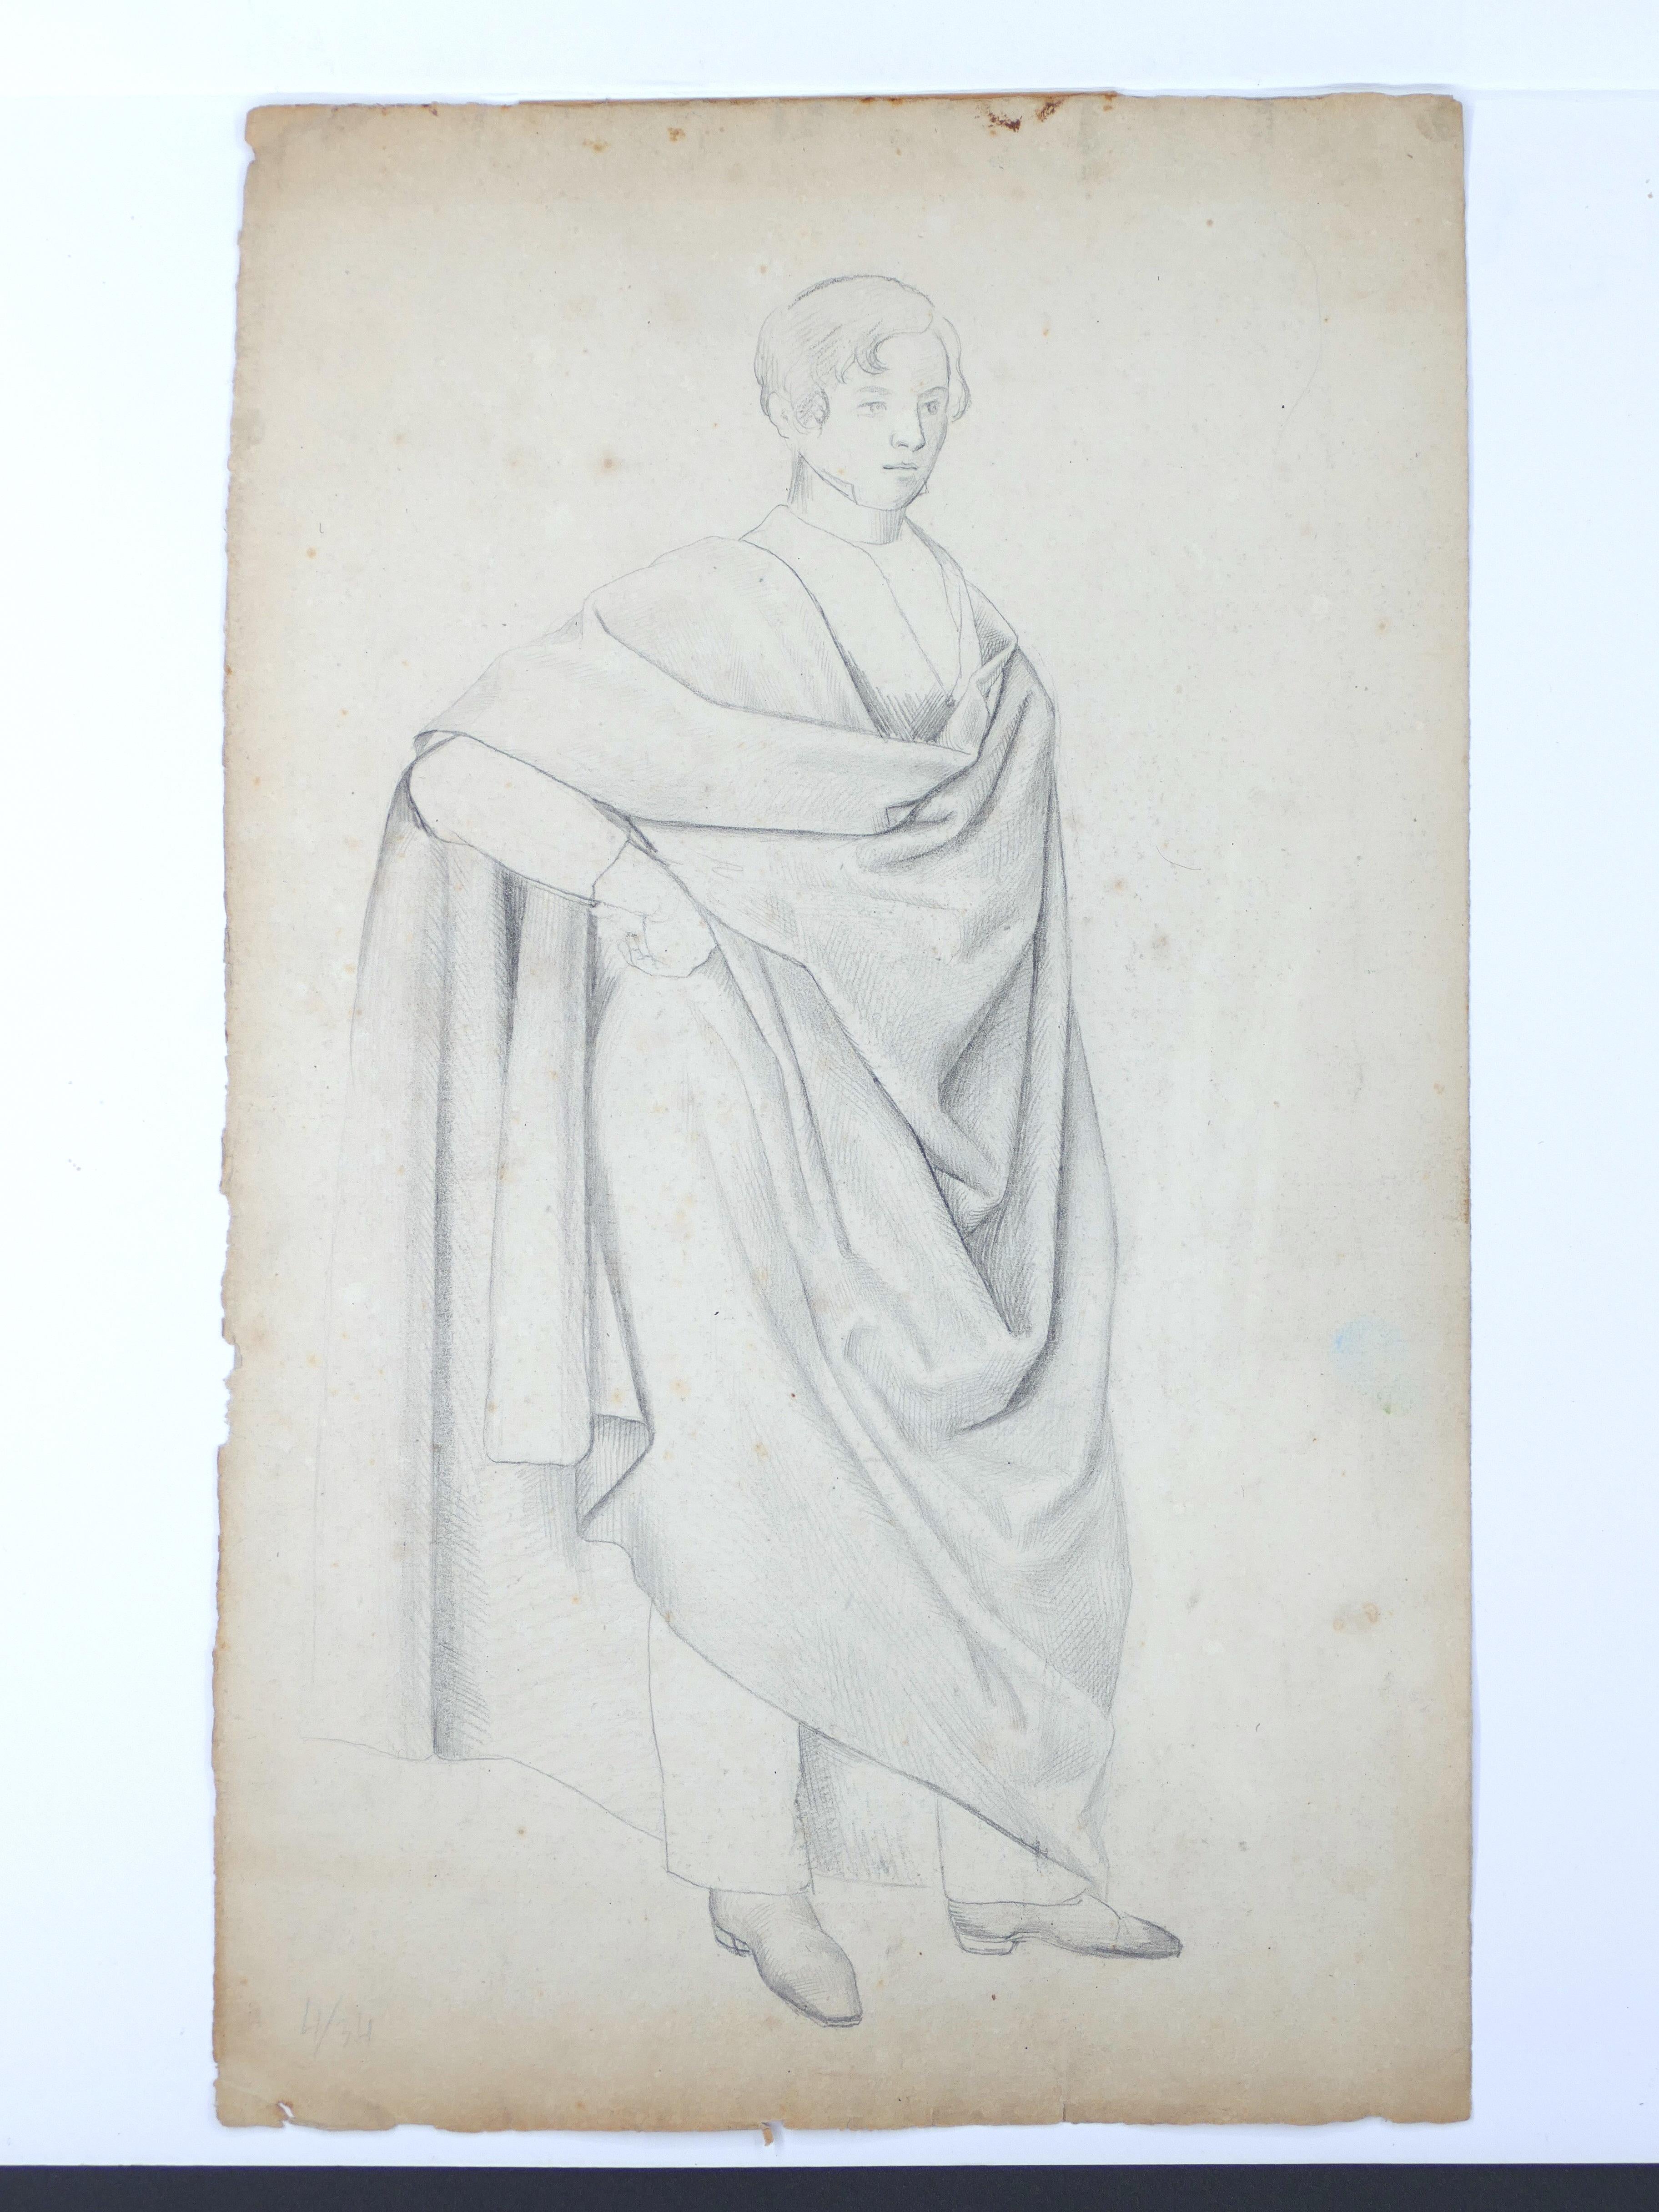 Hermann Goldschmidt Figurative Art - Man with Cloak - Original Pencil Drawing by H. Goldschmidt - Late 19th Century